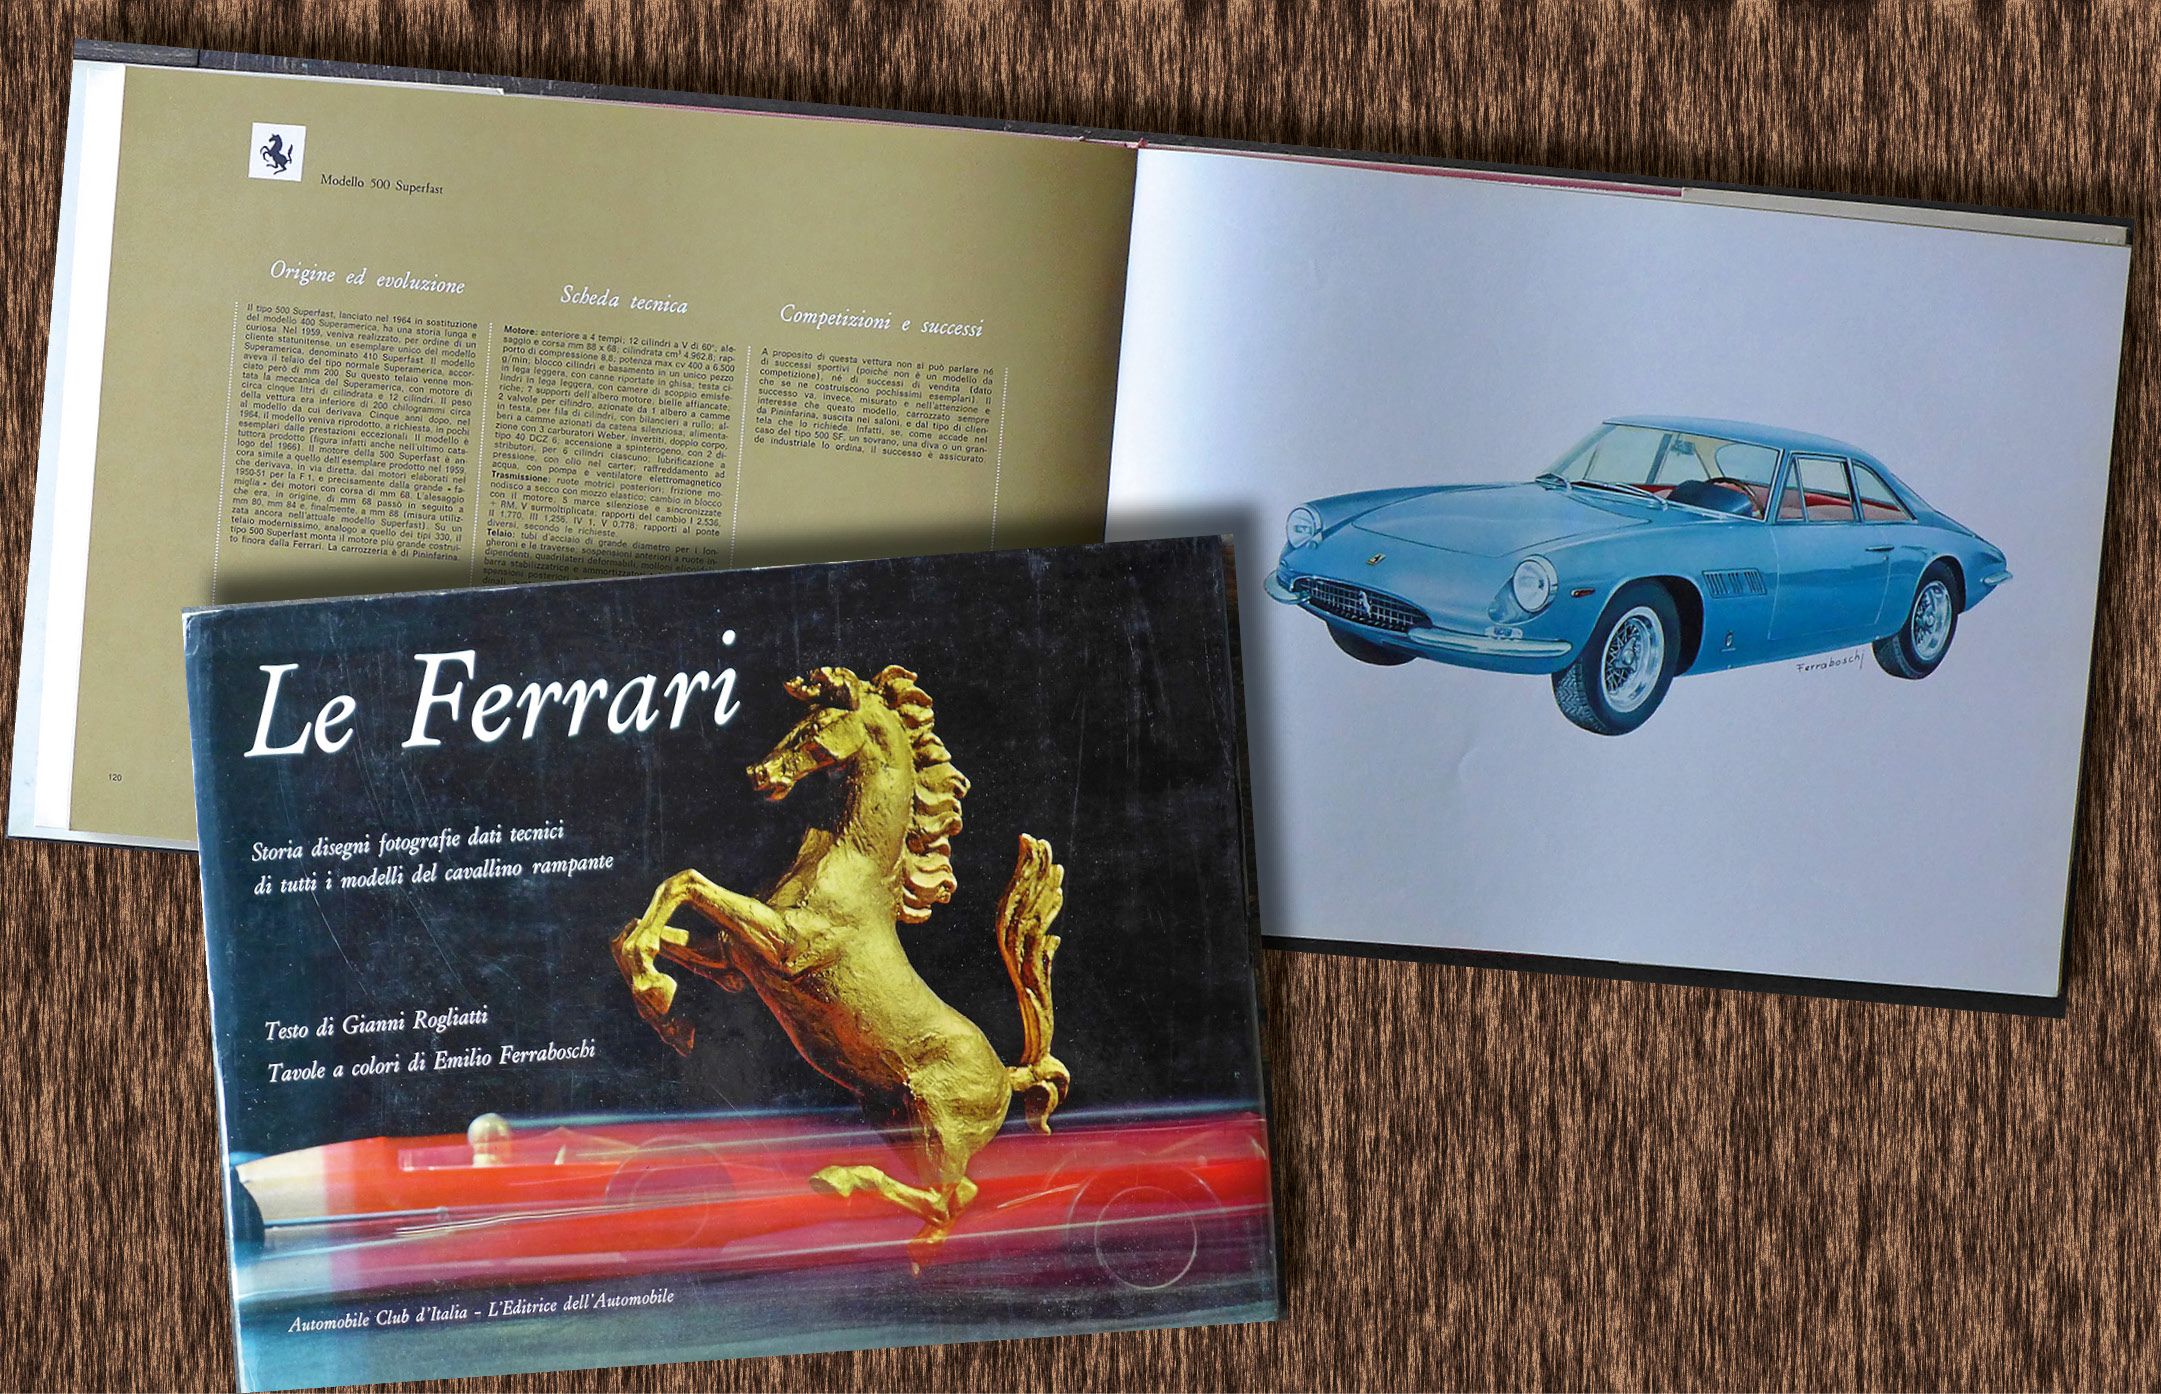 Le Ferrari book